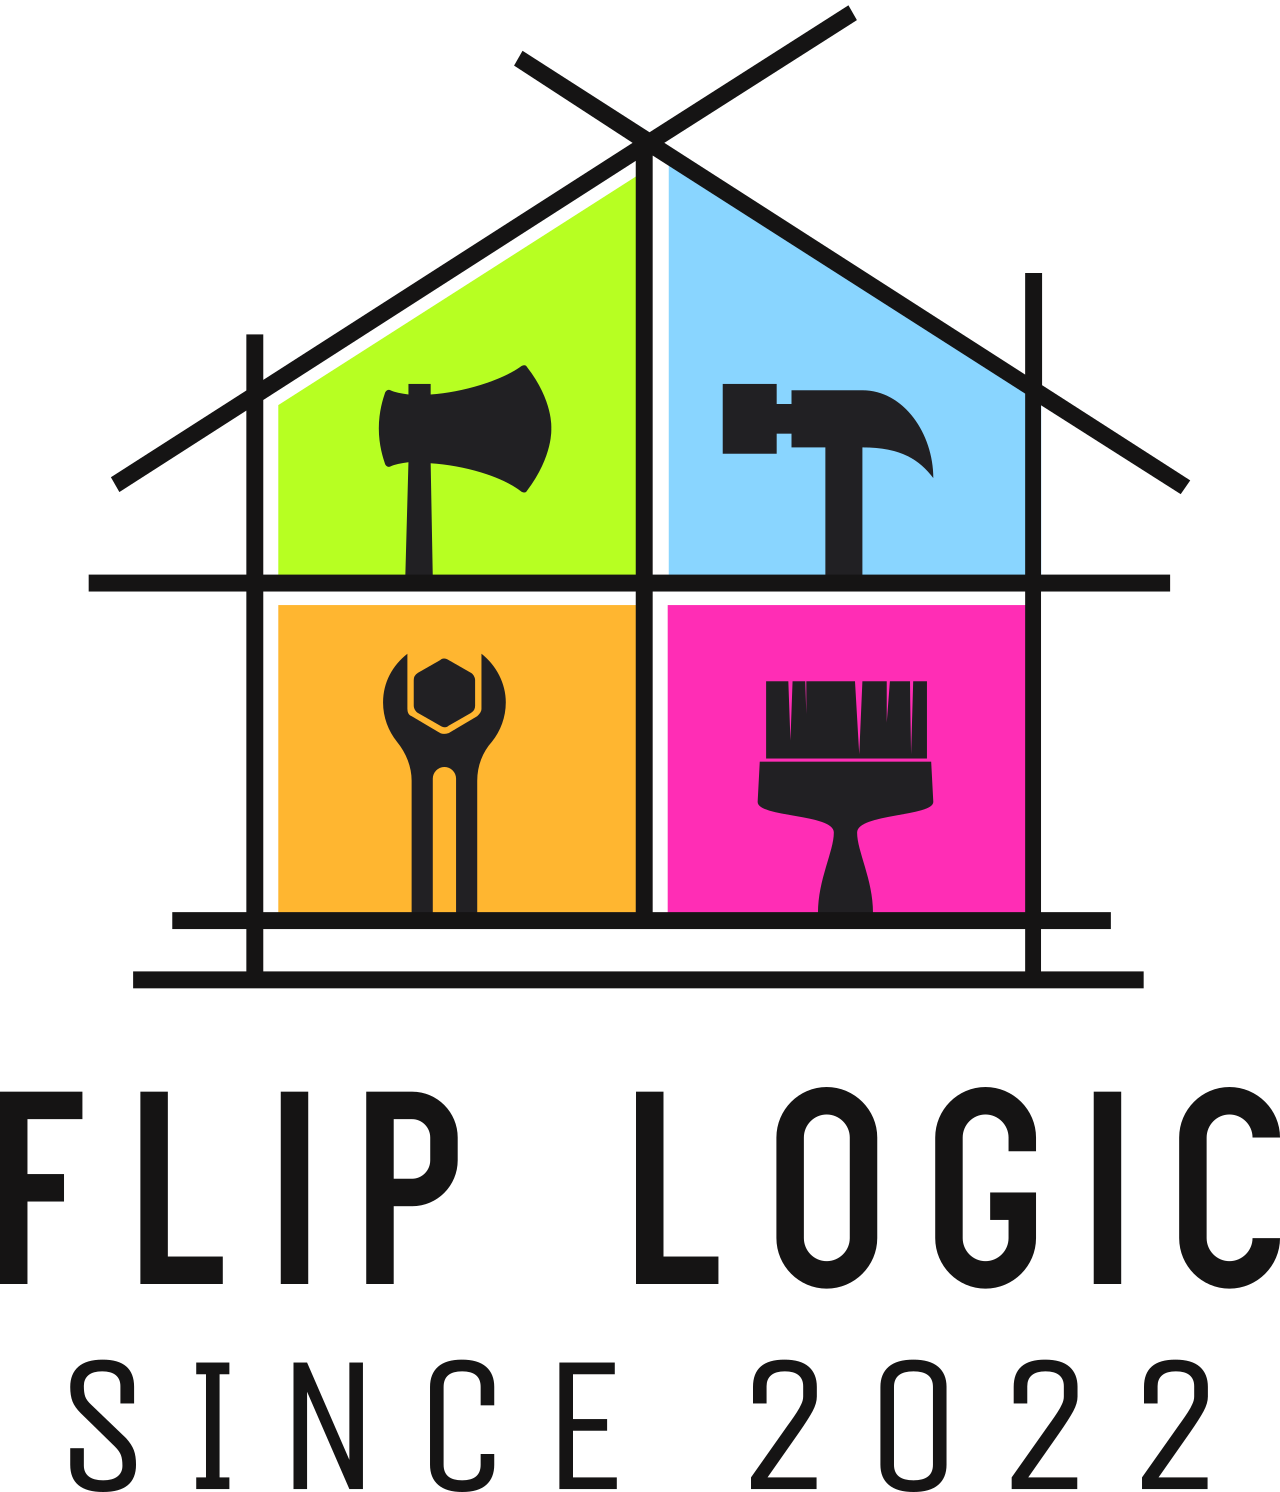 FLIP LOGIC's web page